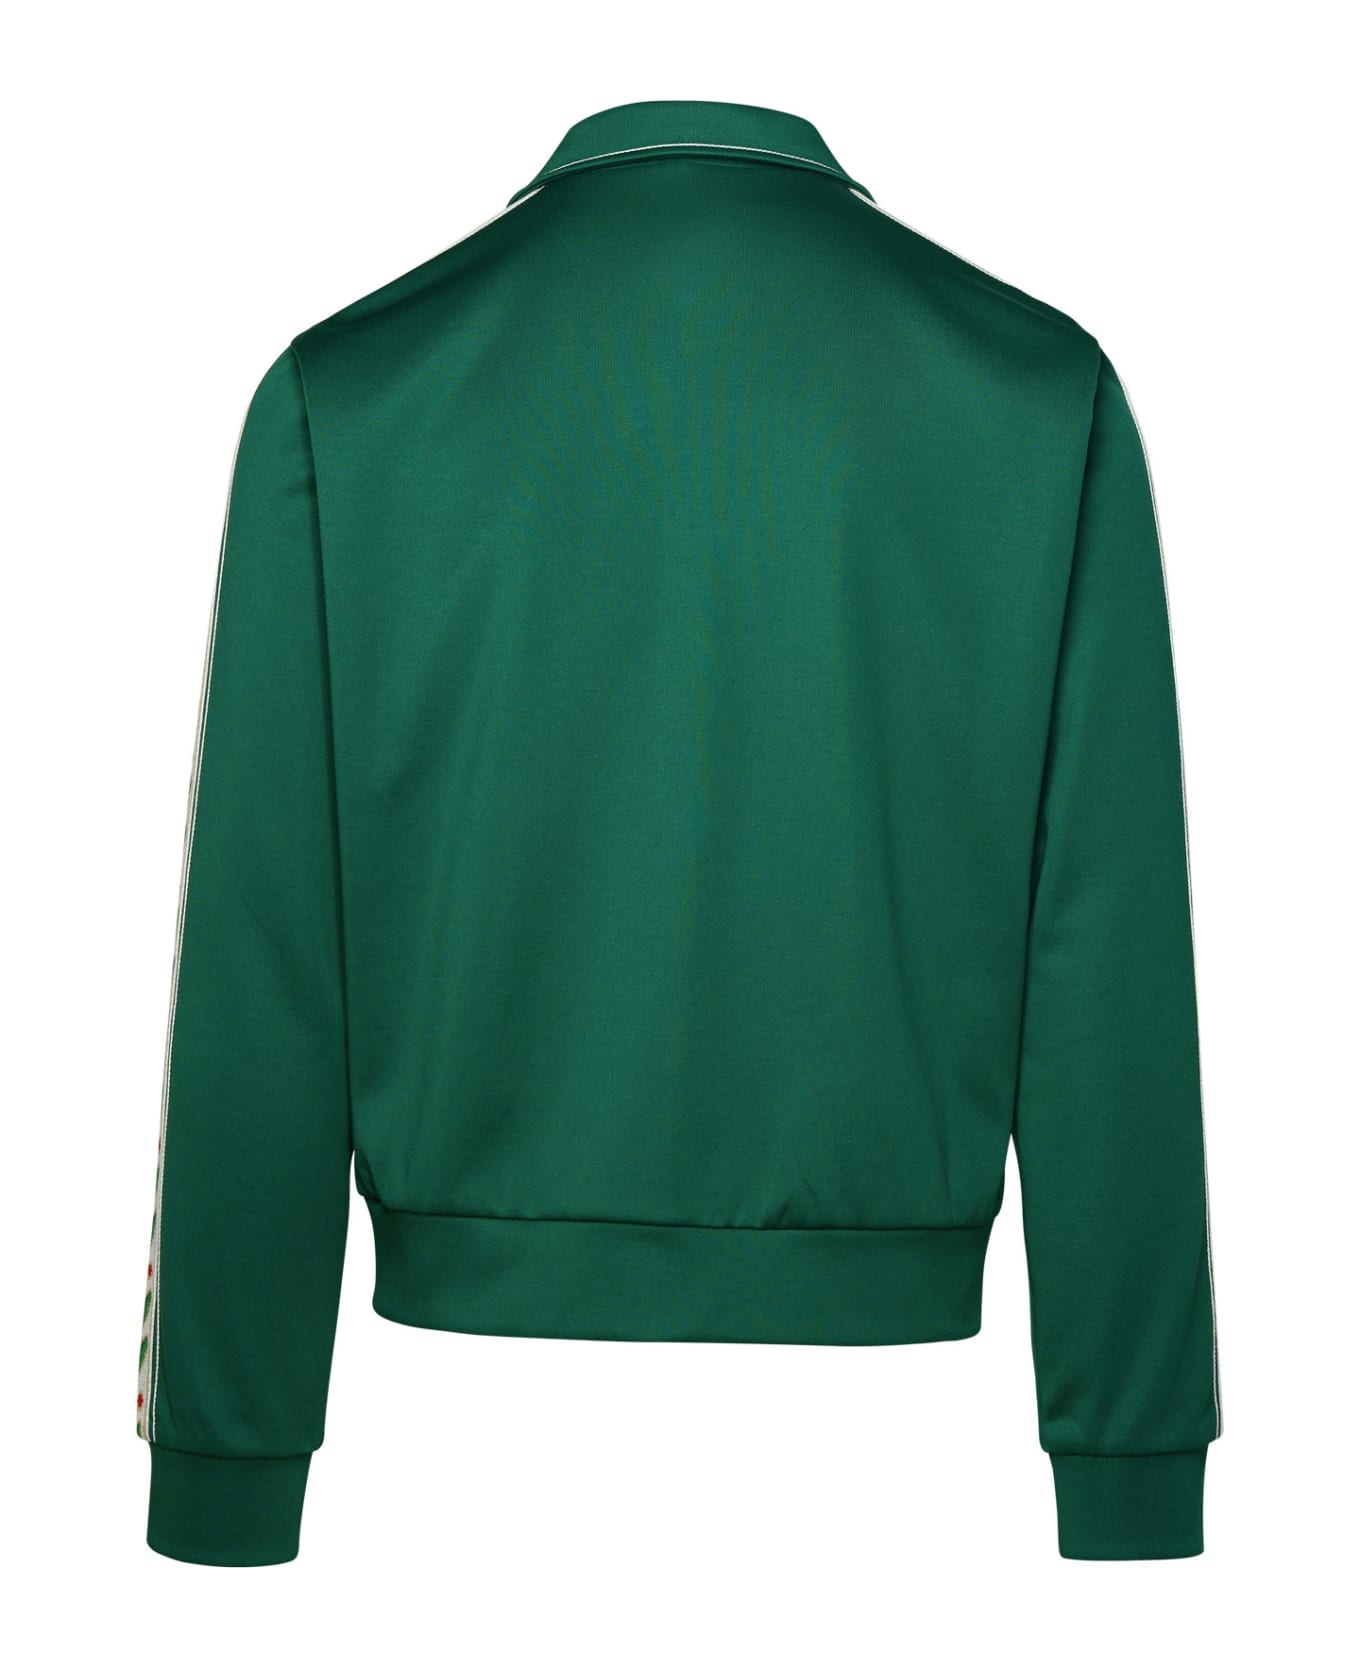 Casablanca 'laurel' Green Cotton Blend Sweatshirt - Green